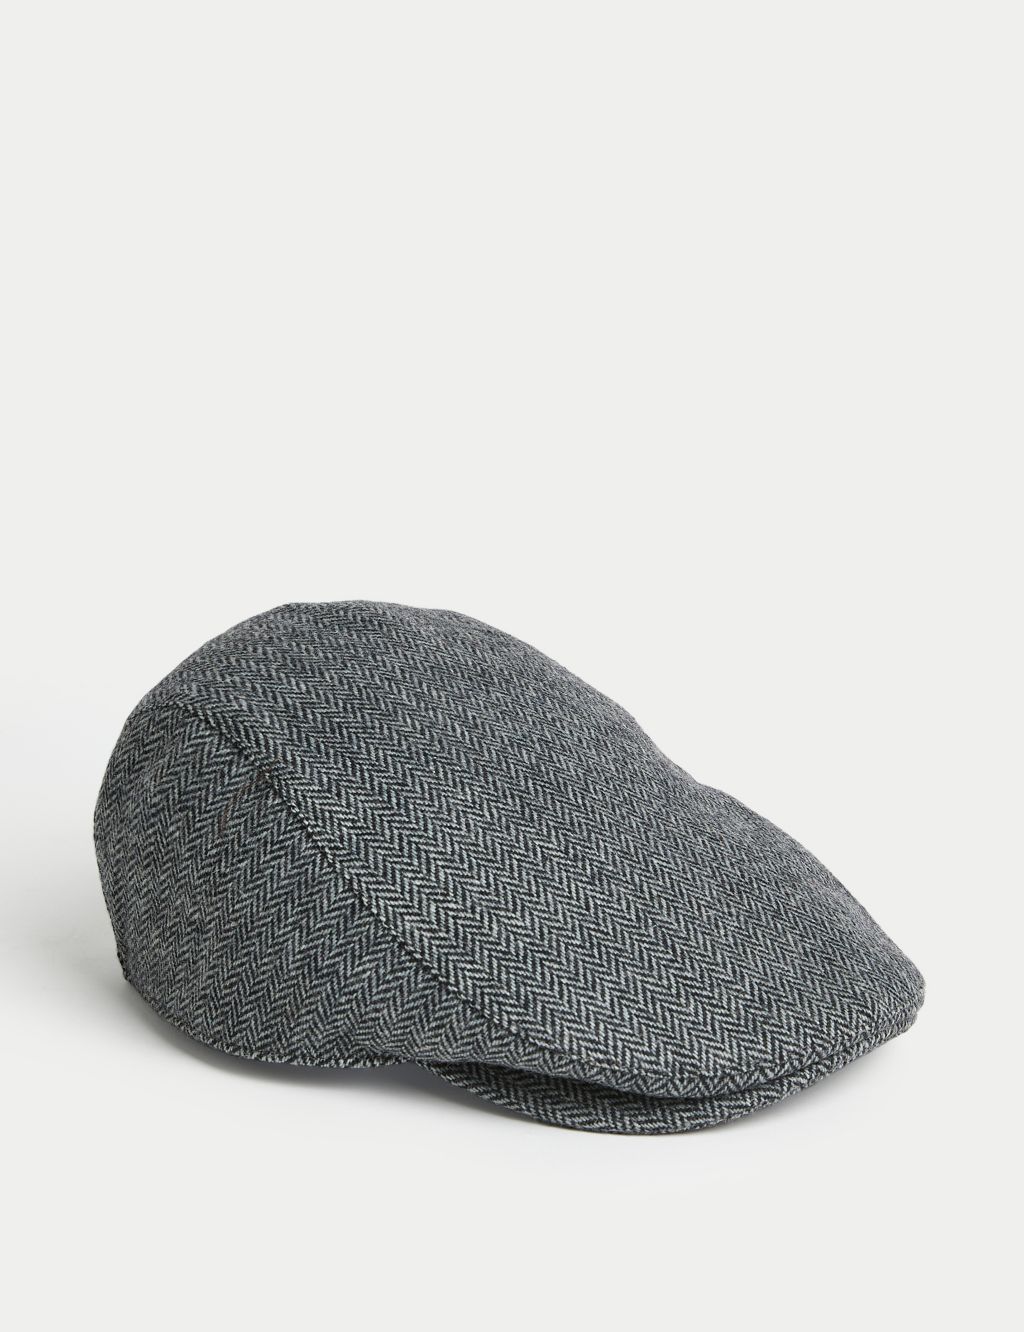 Wool Blend Herringbone Flat Cap with Stormwear™ | M&S Collection | M&S